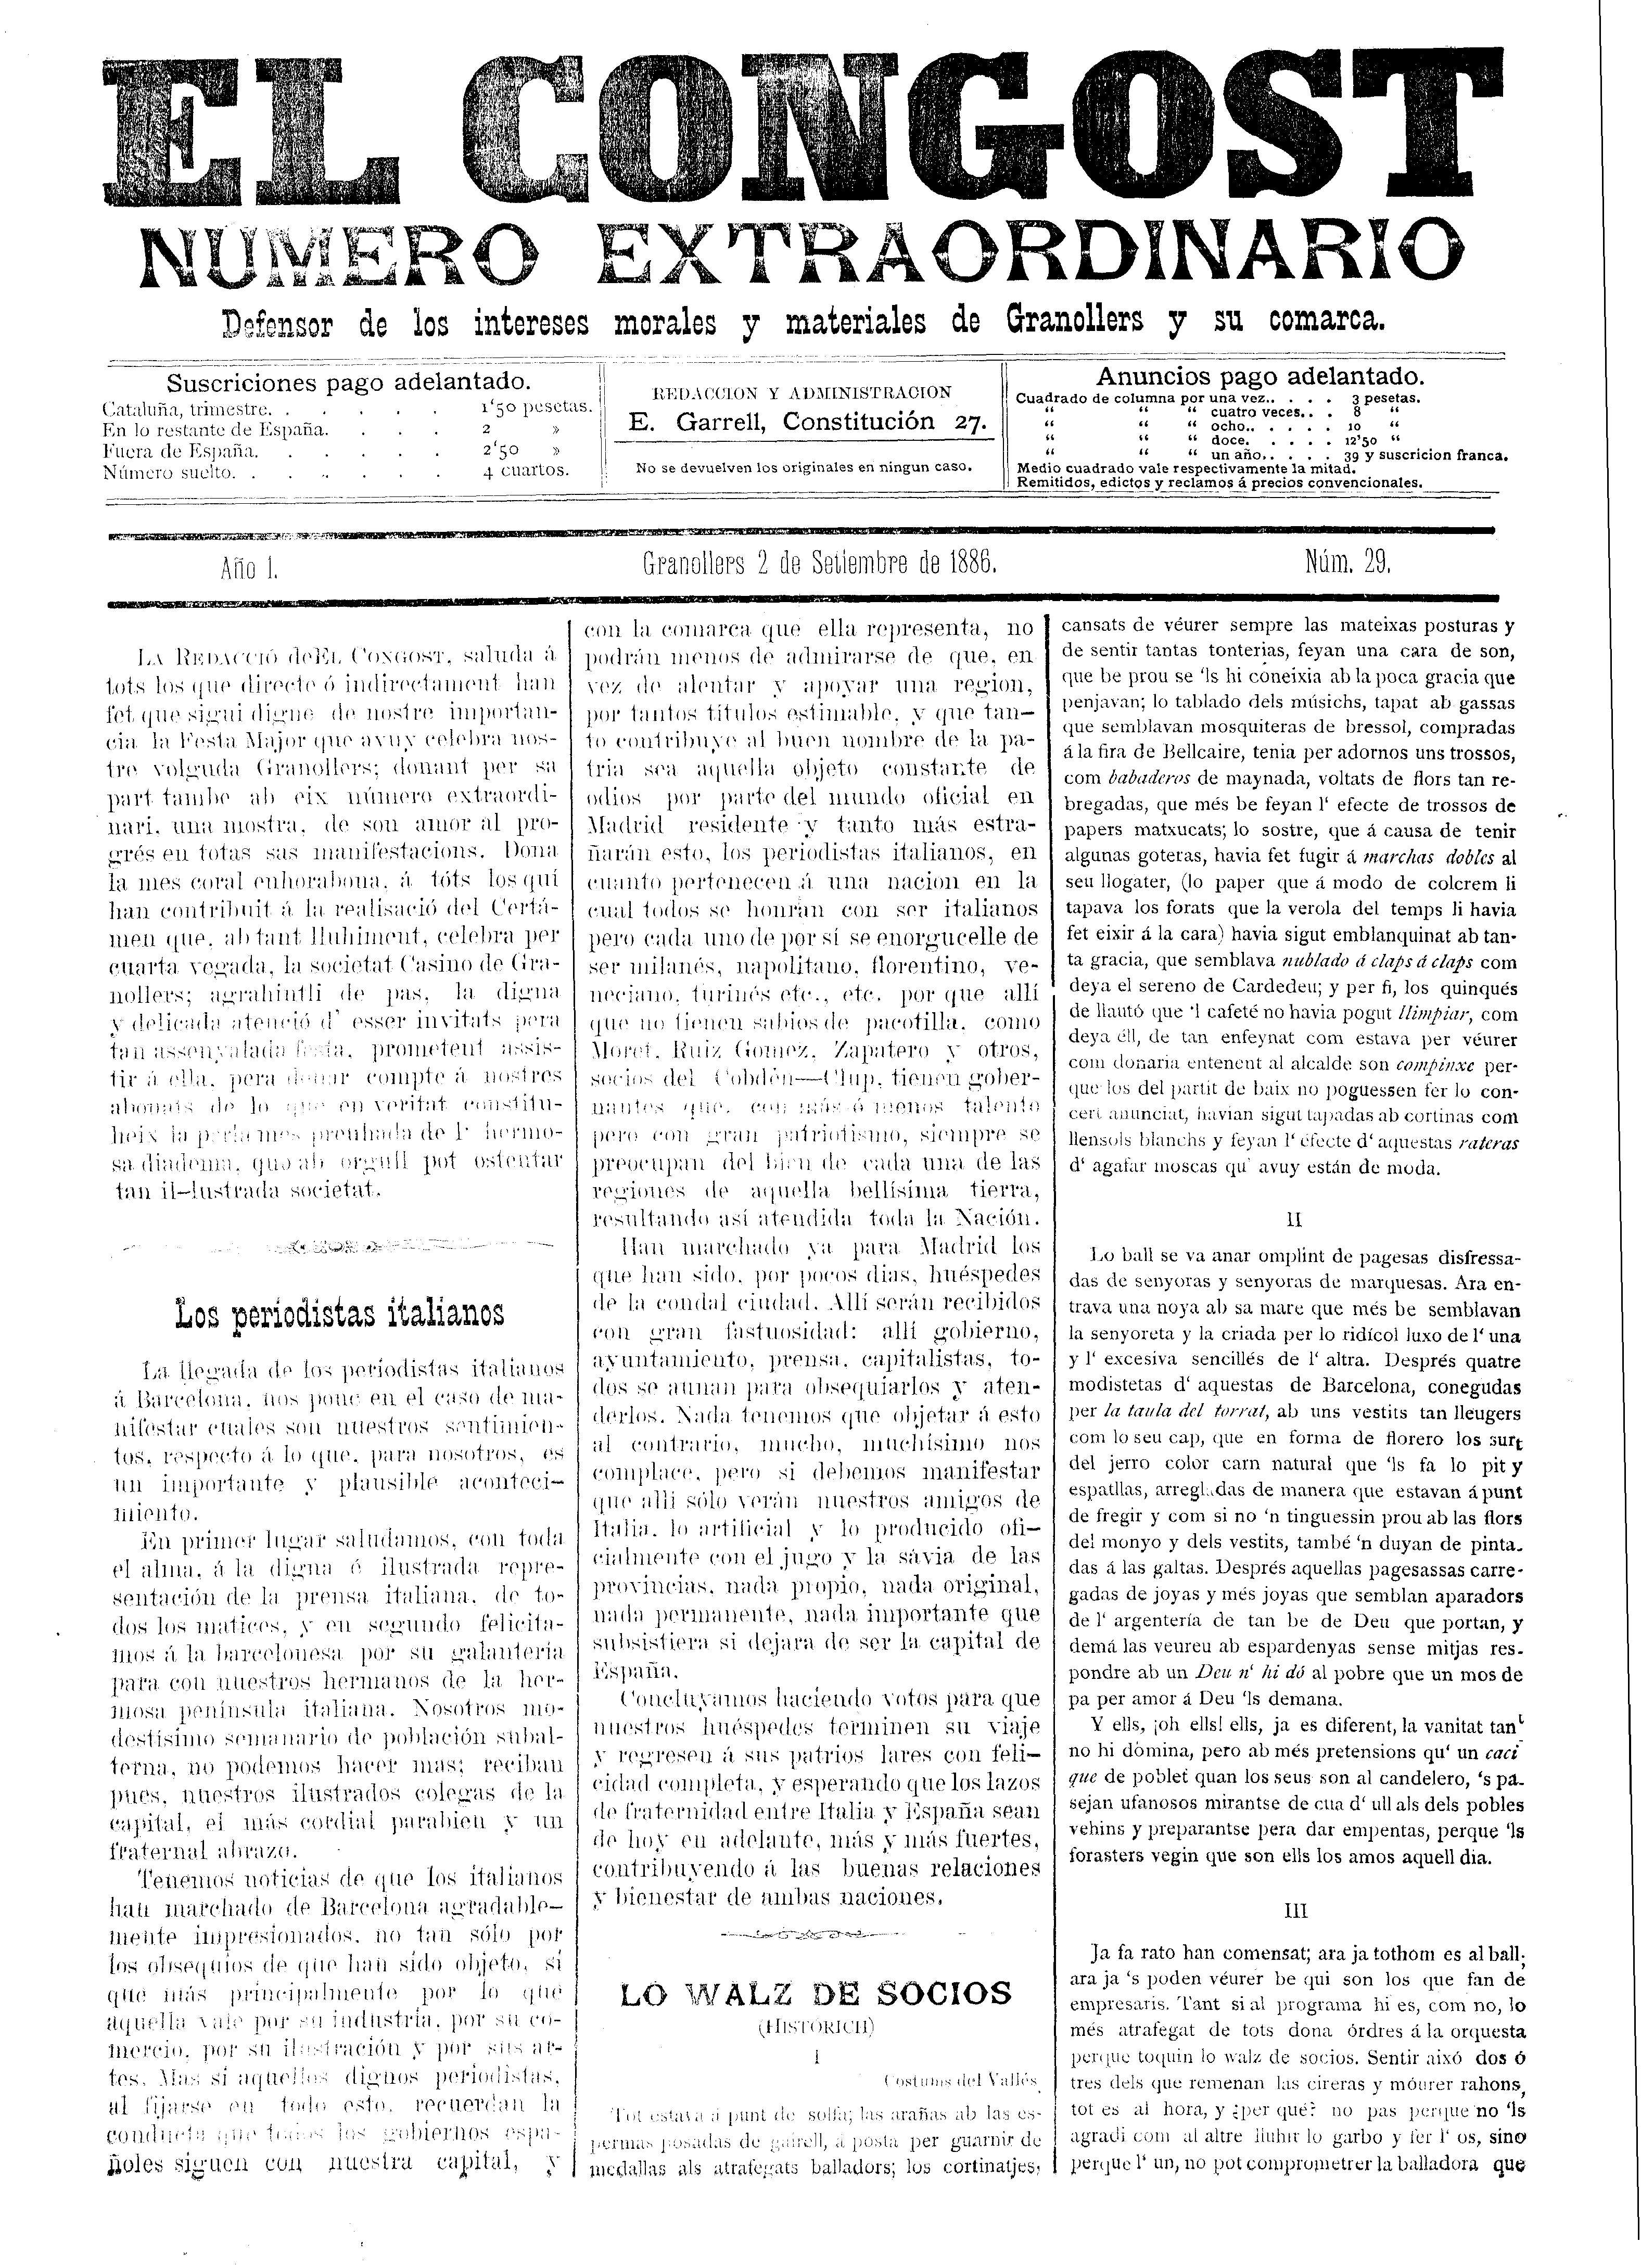 El Congost, 2/9/1886 [Exemplar]